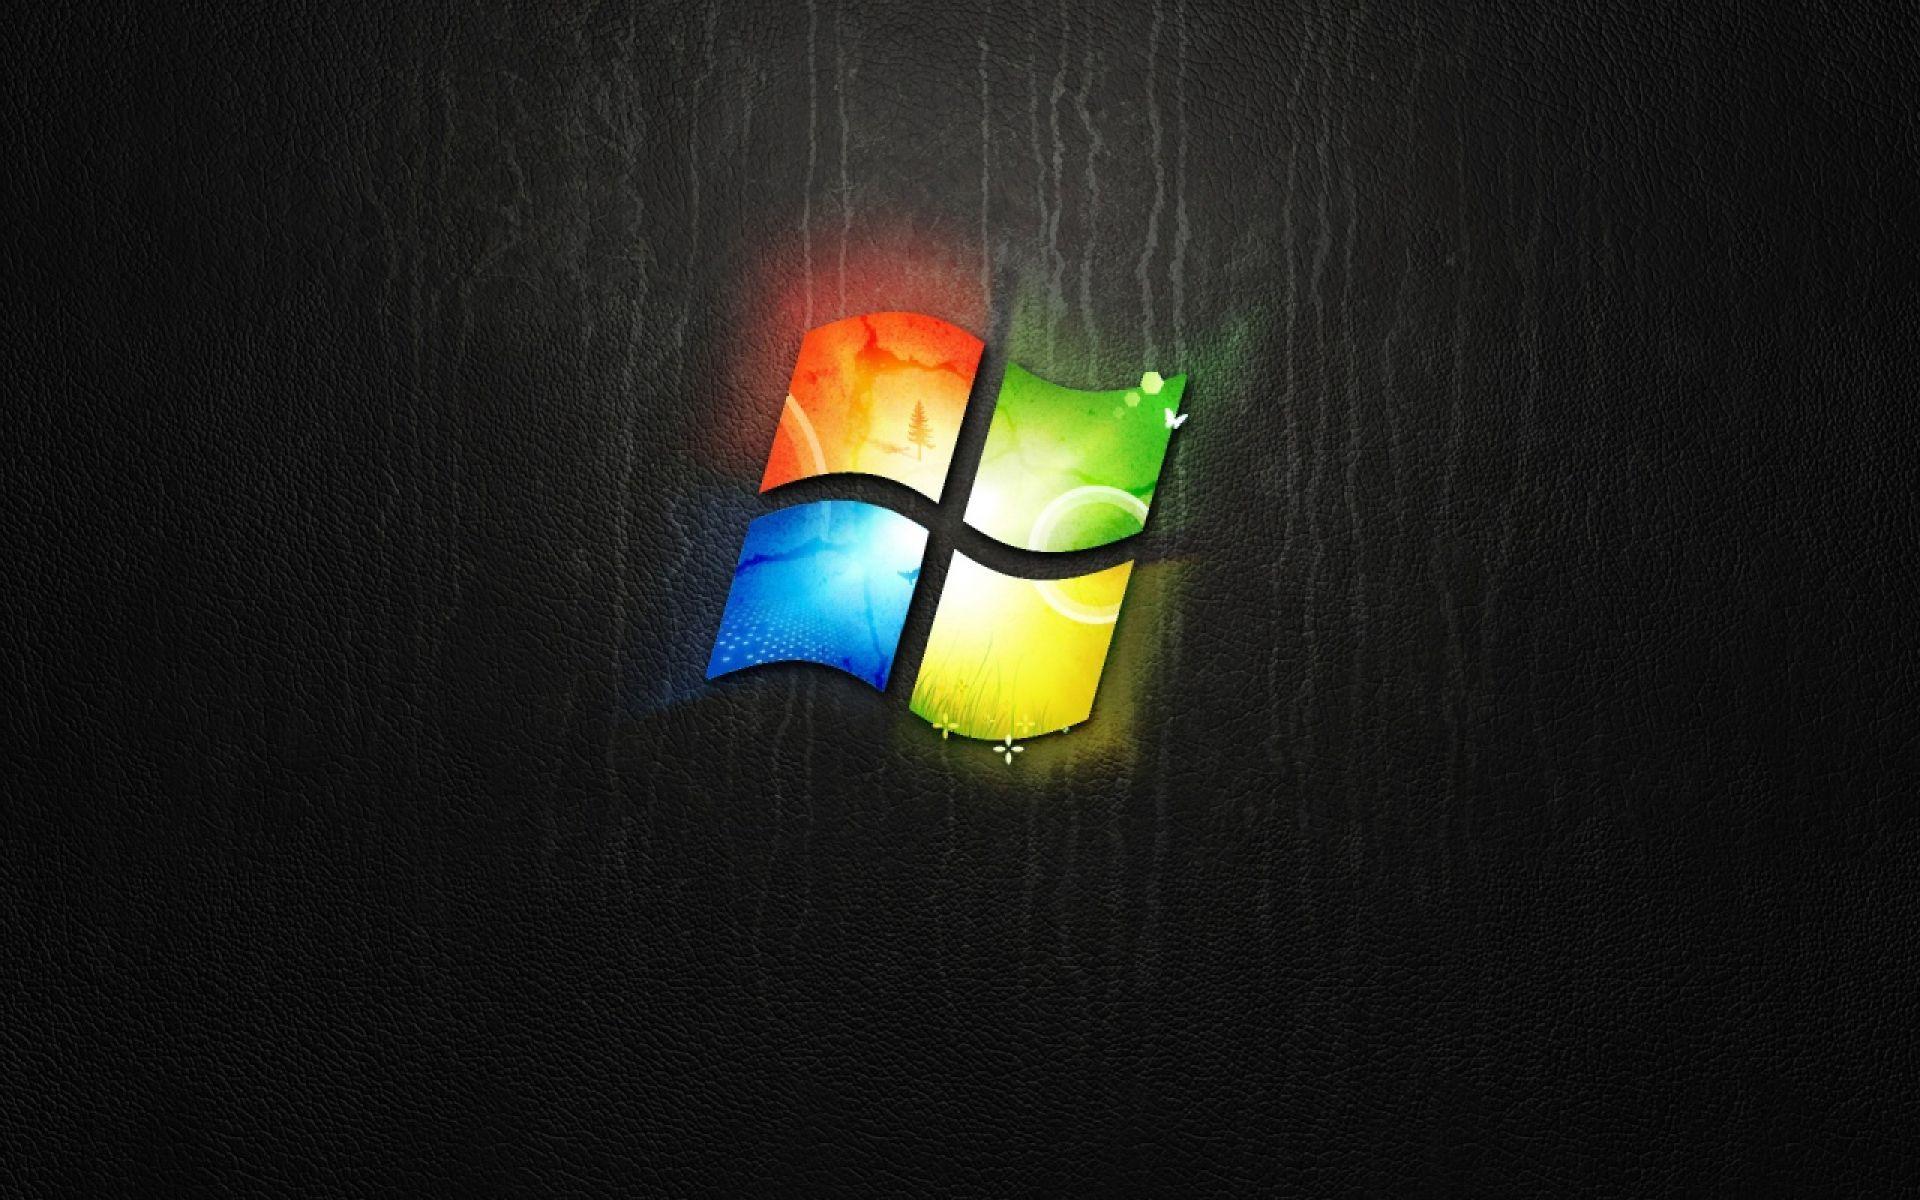 Dark Windows XP Edition. HD Brands and Logos Wallpaper